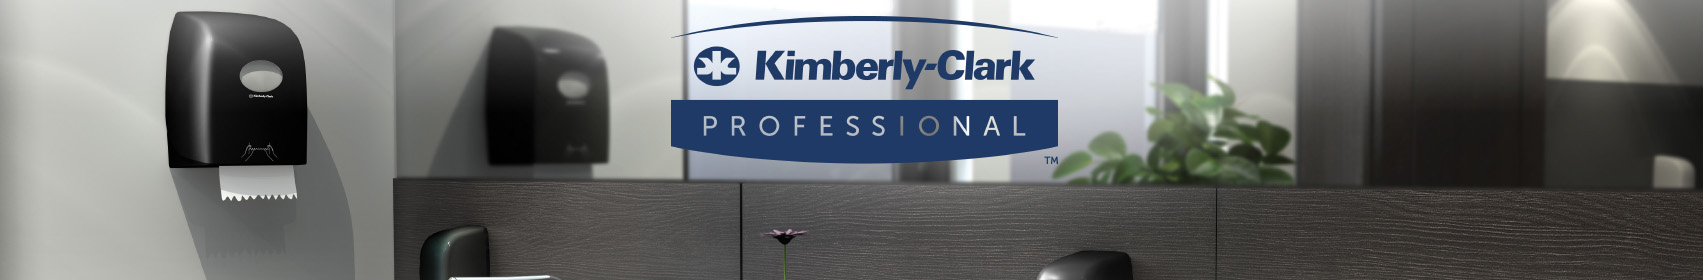 kimberly_clark_professional_banner